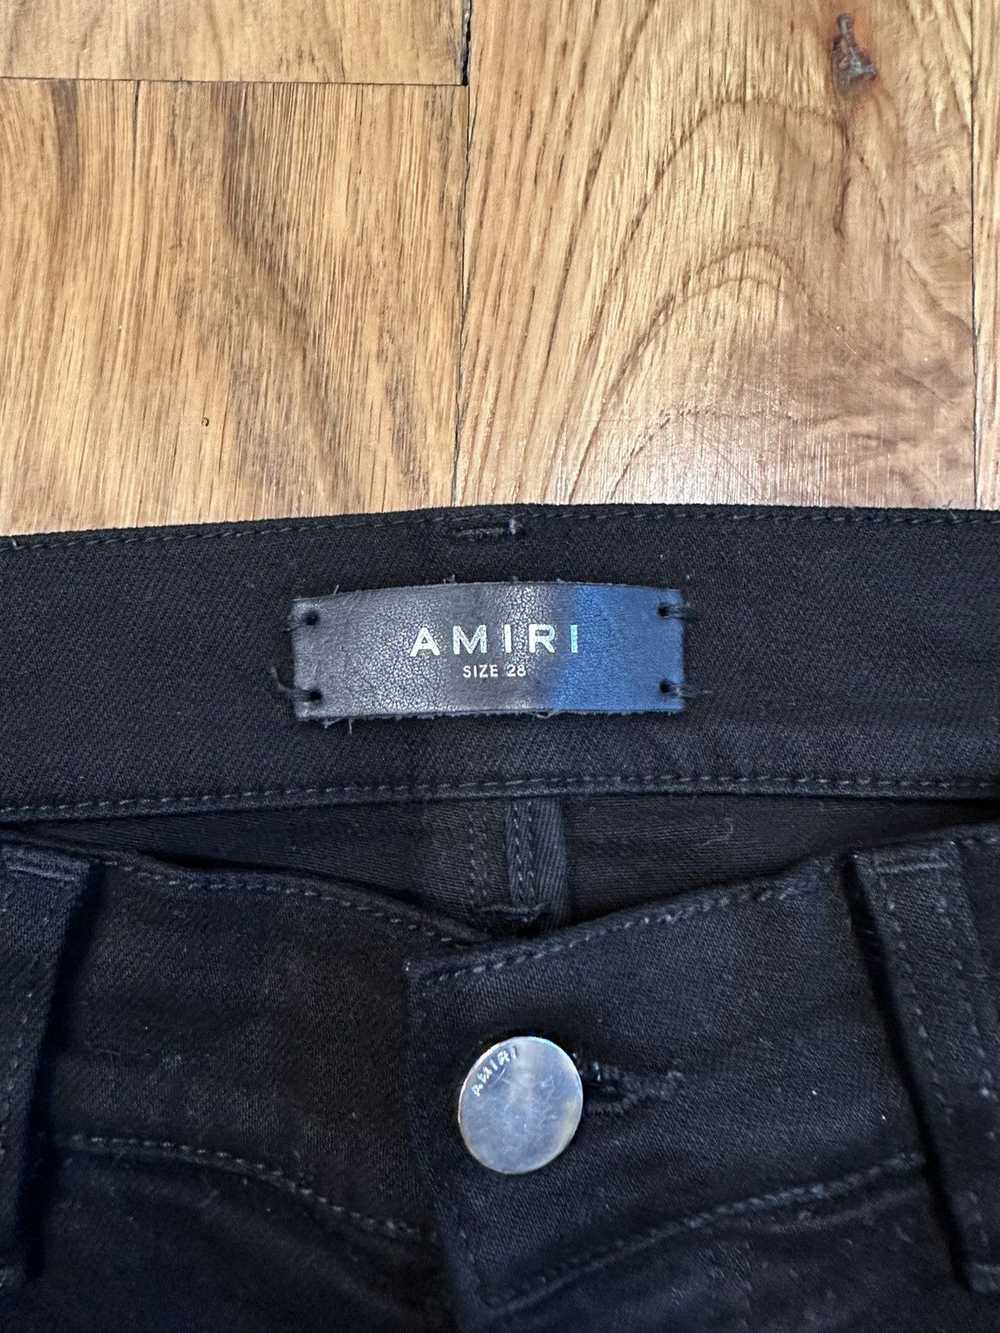 Amiri Amiri MX1 Green Camo Black Denim Jeans Size… - image 4